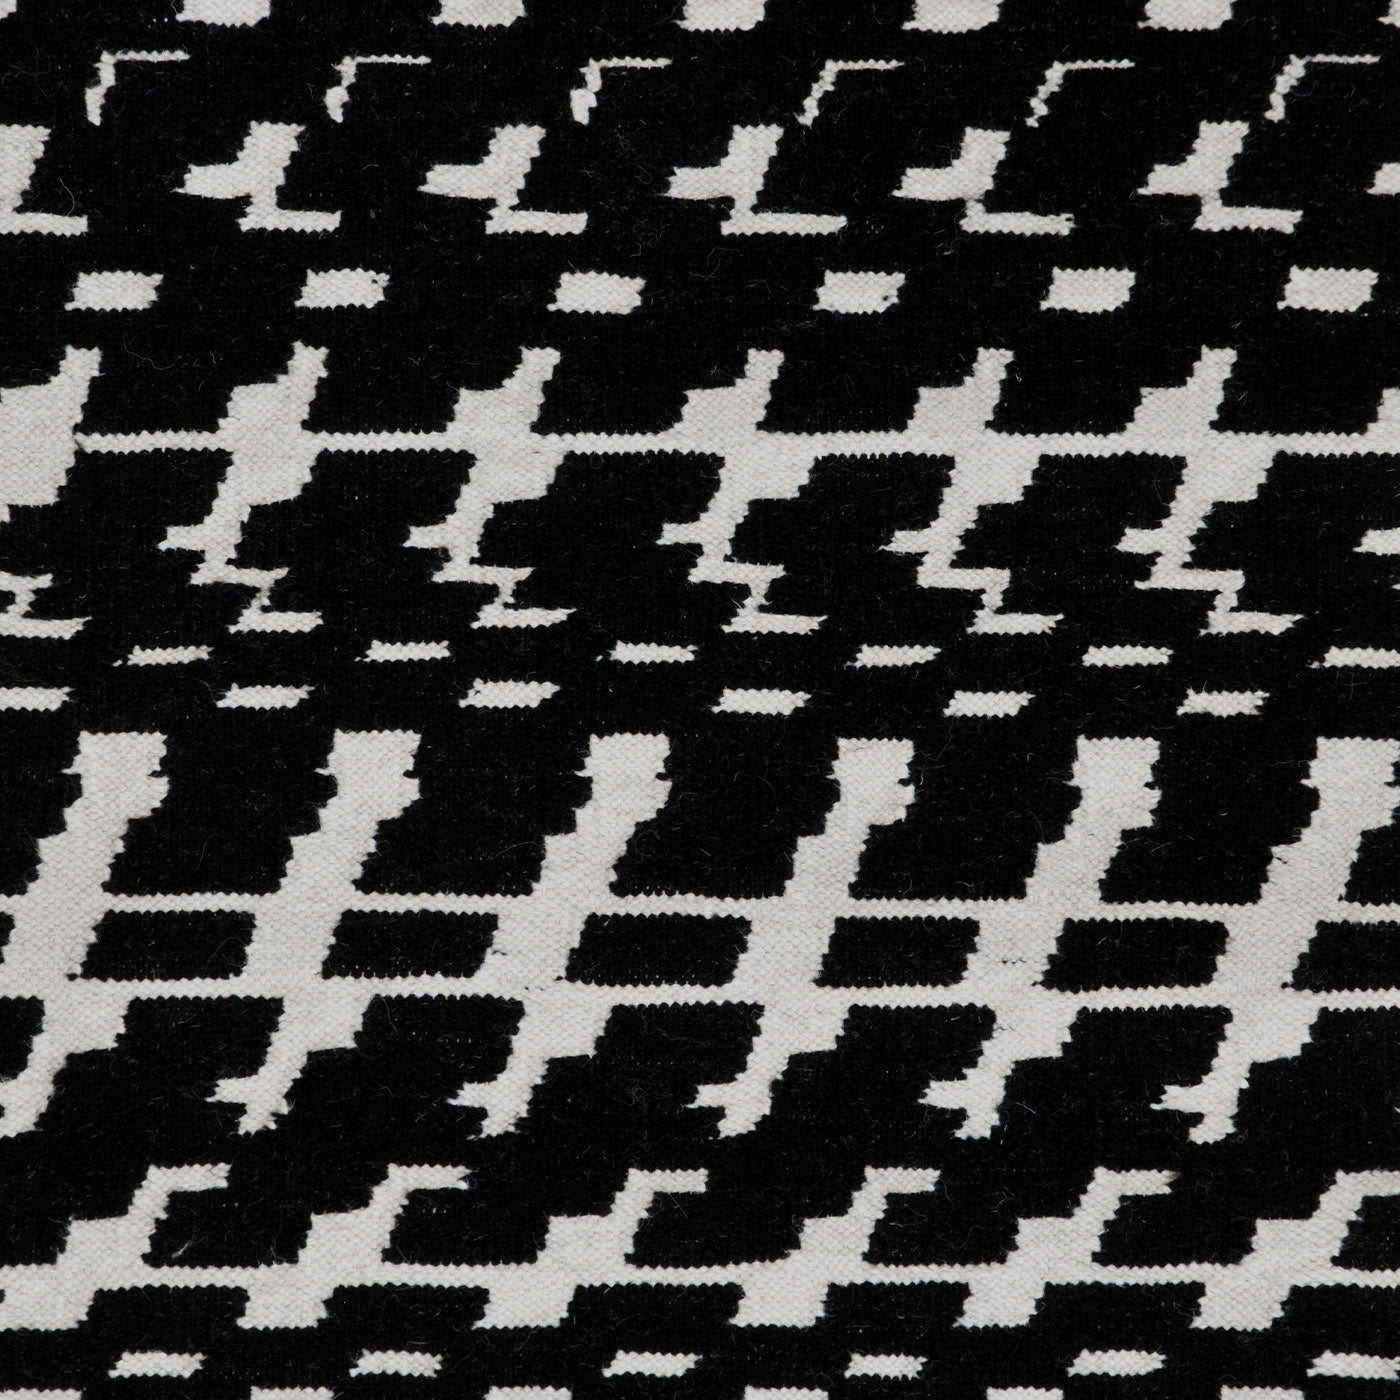 Grand tapis noir et blanc Fuoritempo - Vue alternative 3